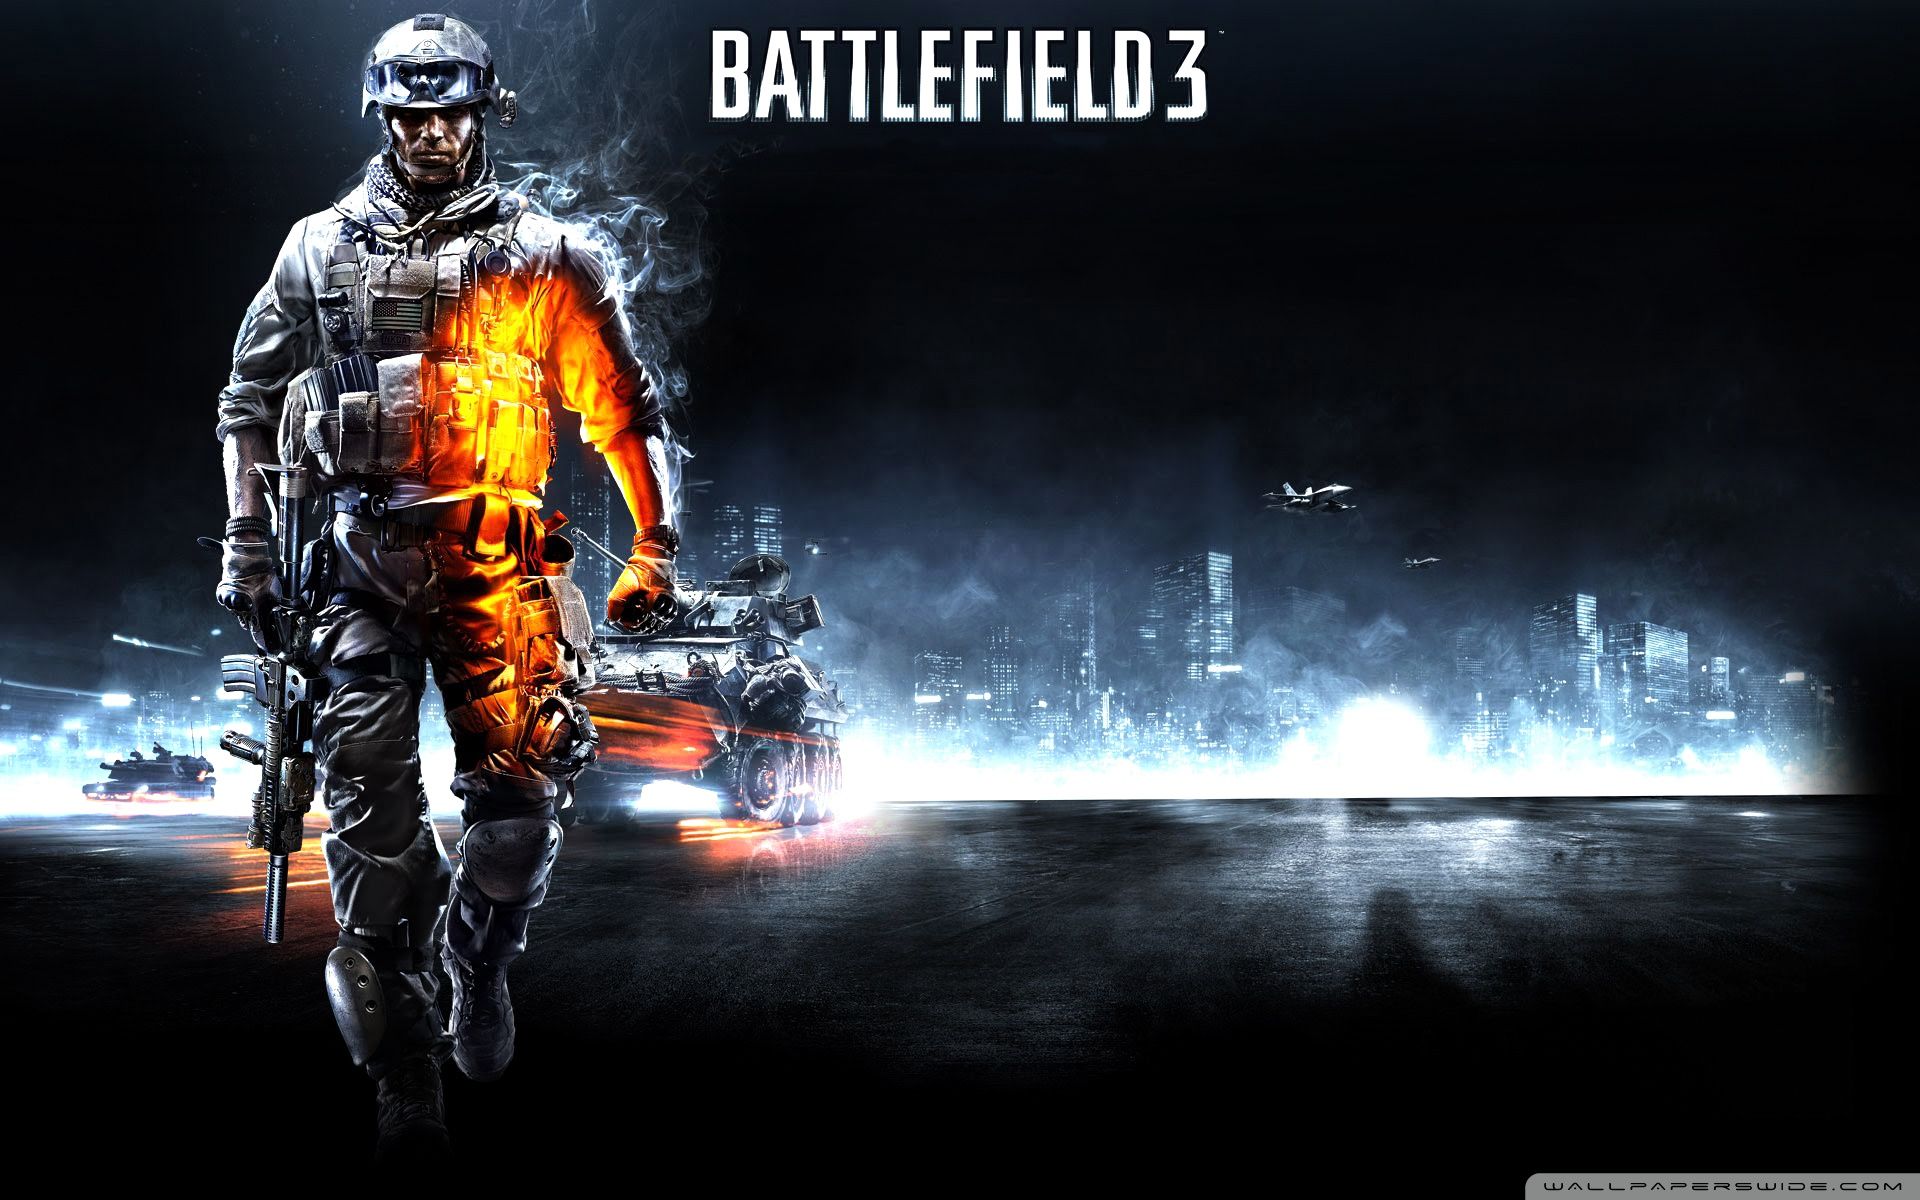 Battlefield 3 Not Launching